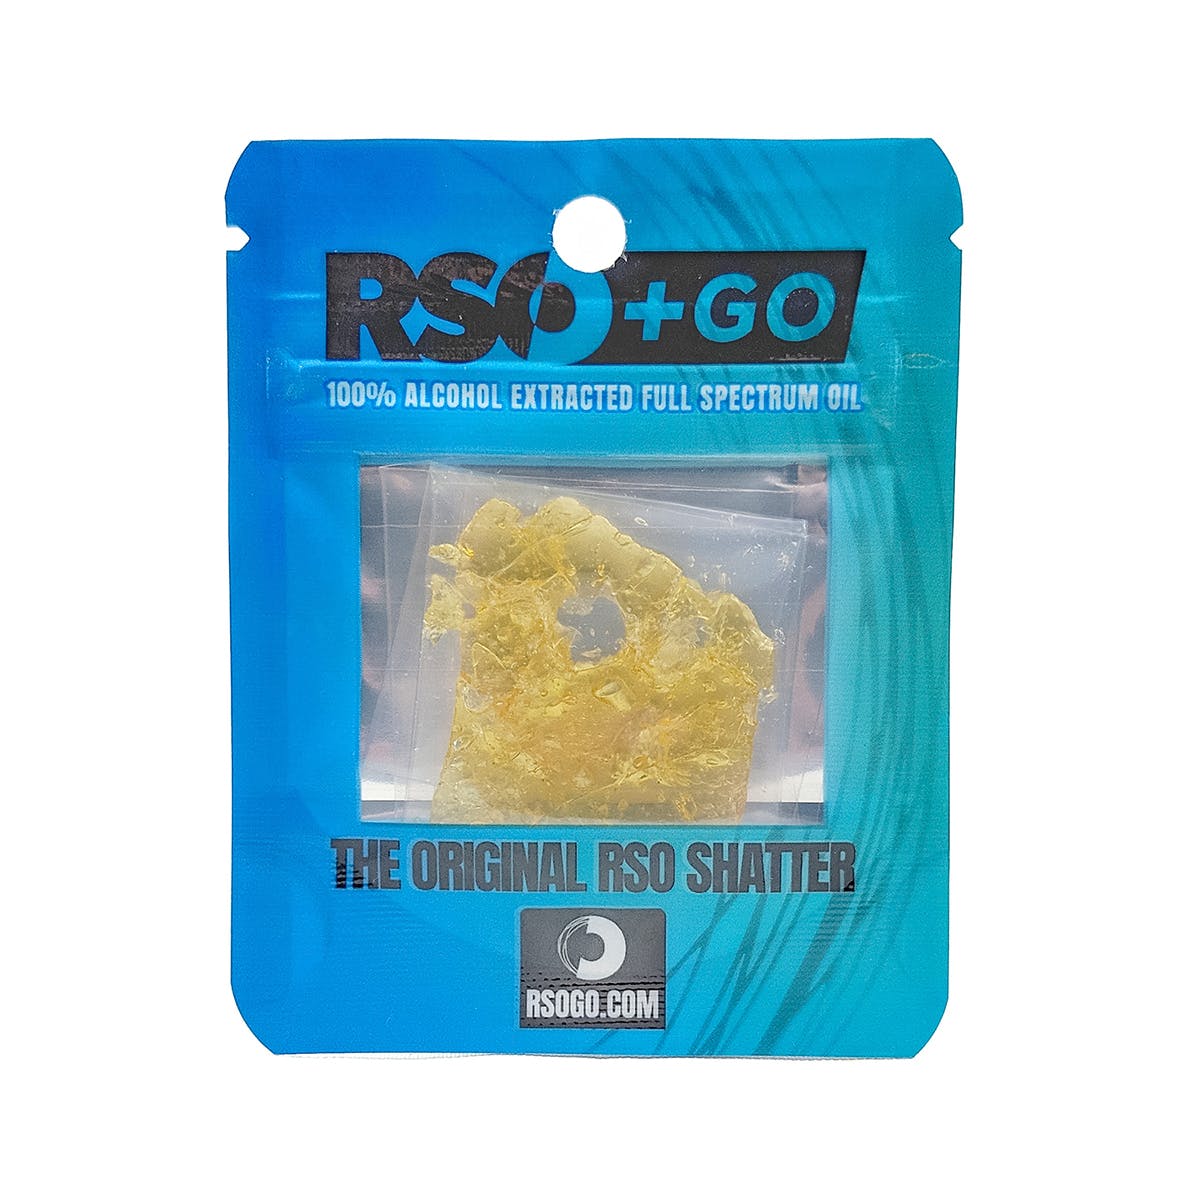 marijuana-dispensaries-kush21-vashon-in-vashon-rso-2bgo-shatter-sour-animal-wa